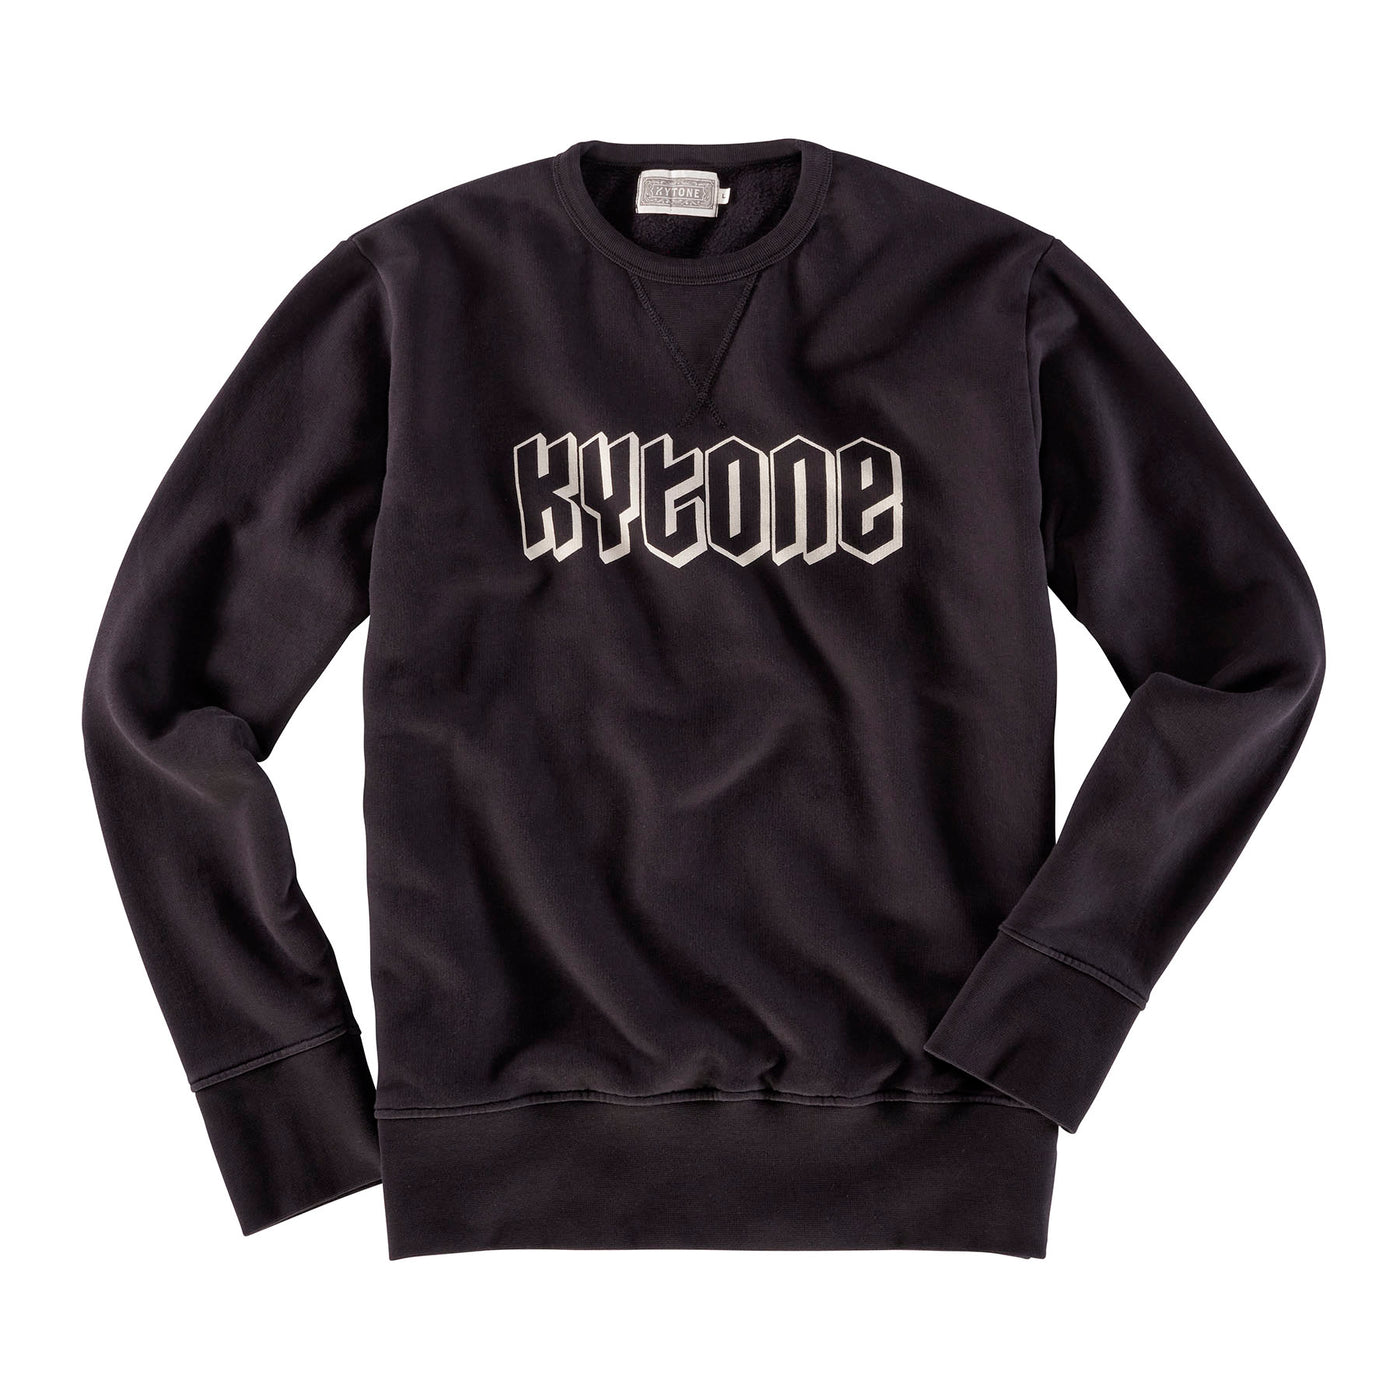 Kytone Sweater Back in